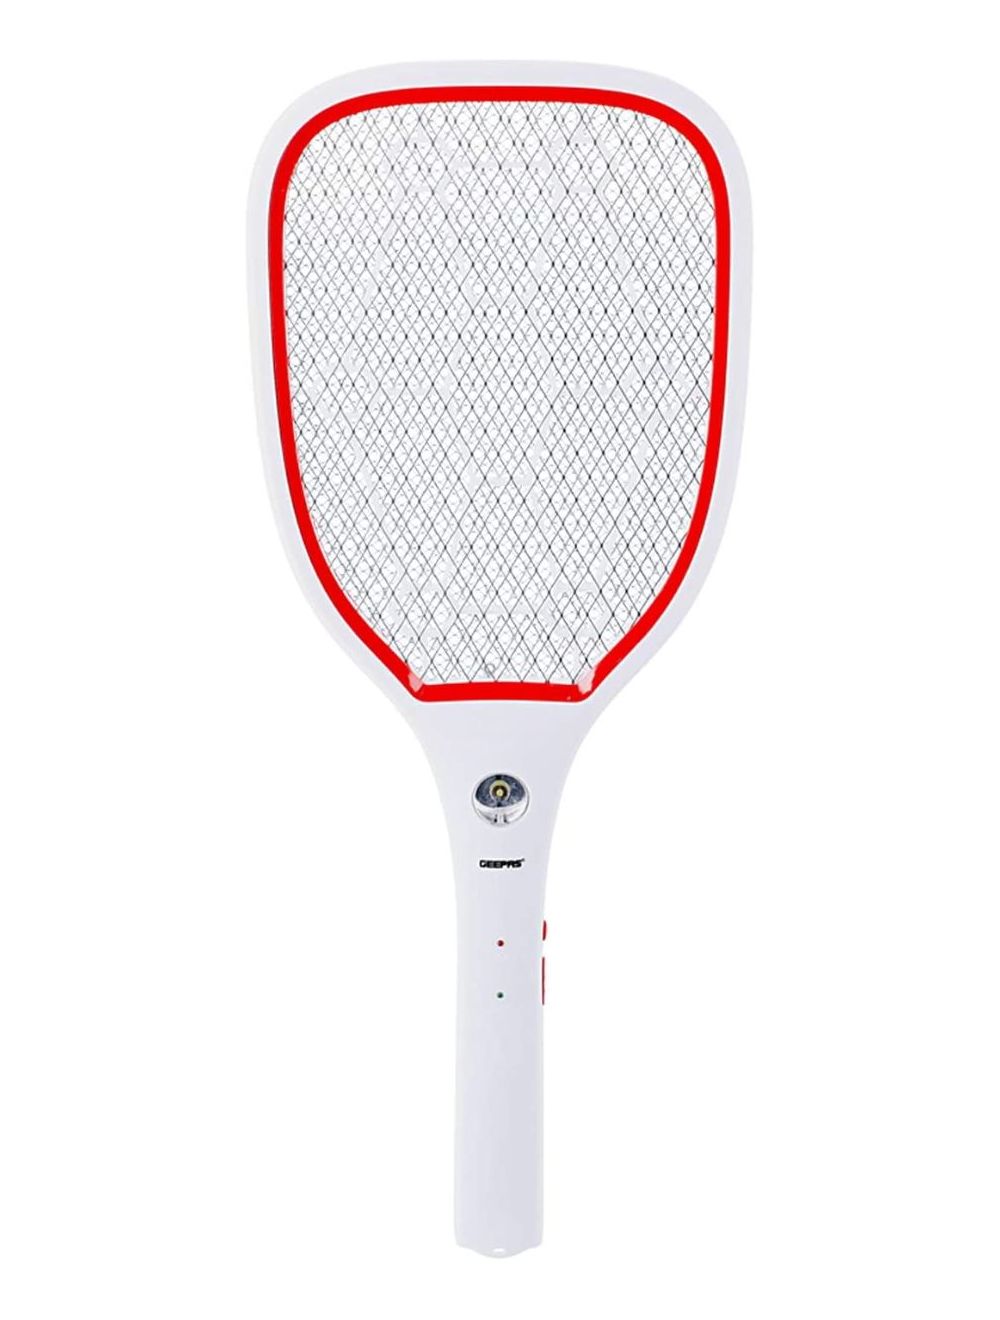 Geepas Electric Mosquito Swatter GMS1150 Orange/White